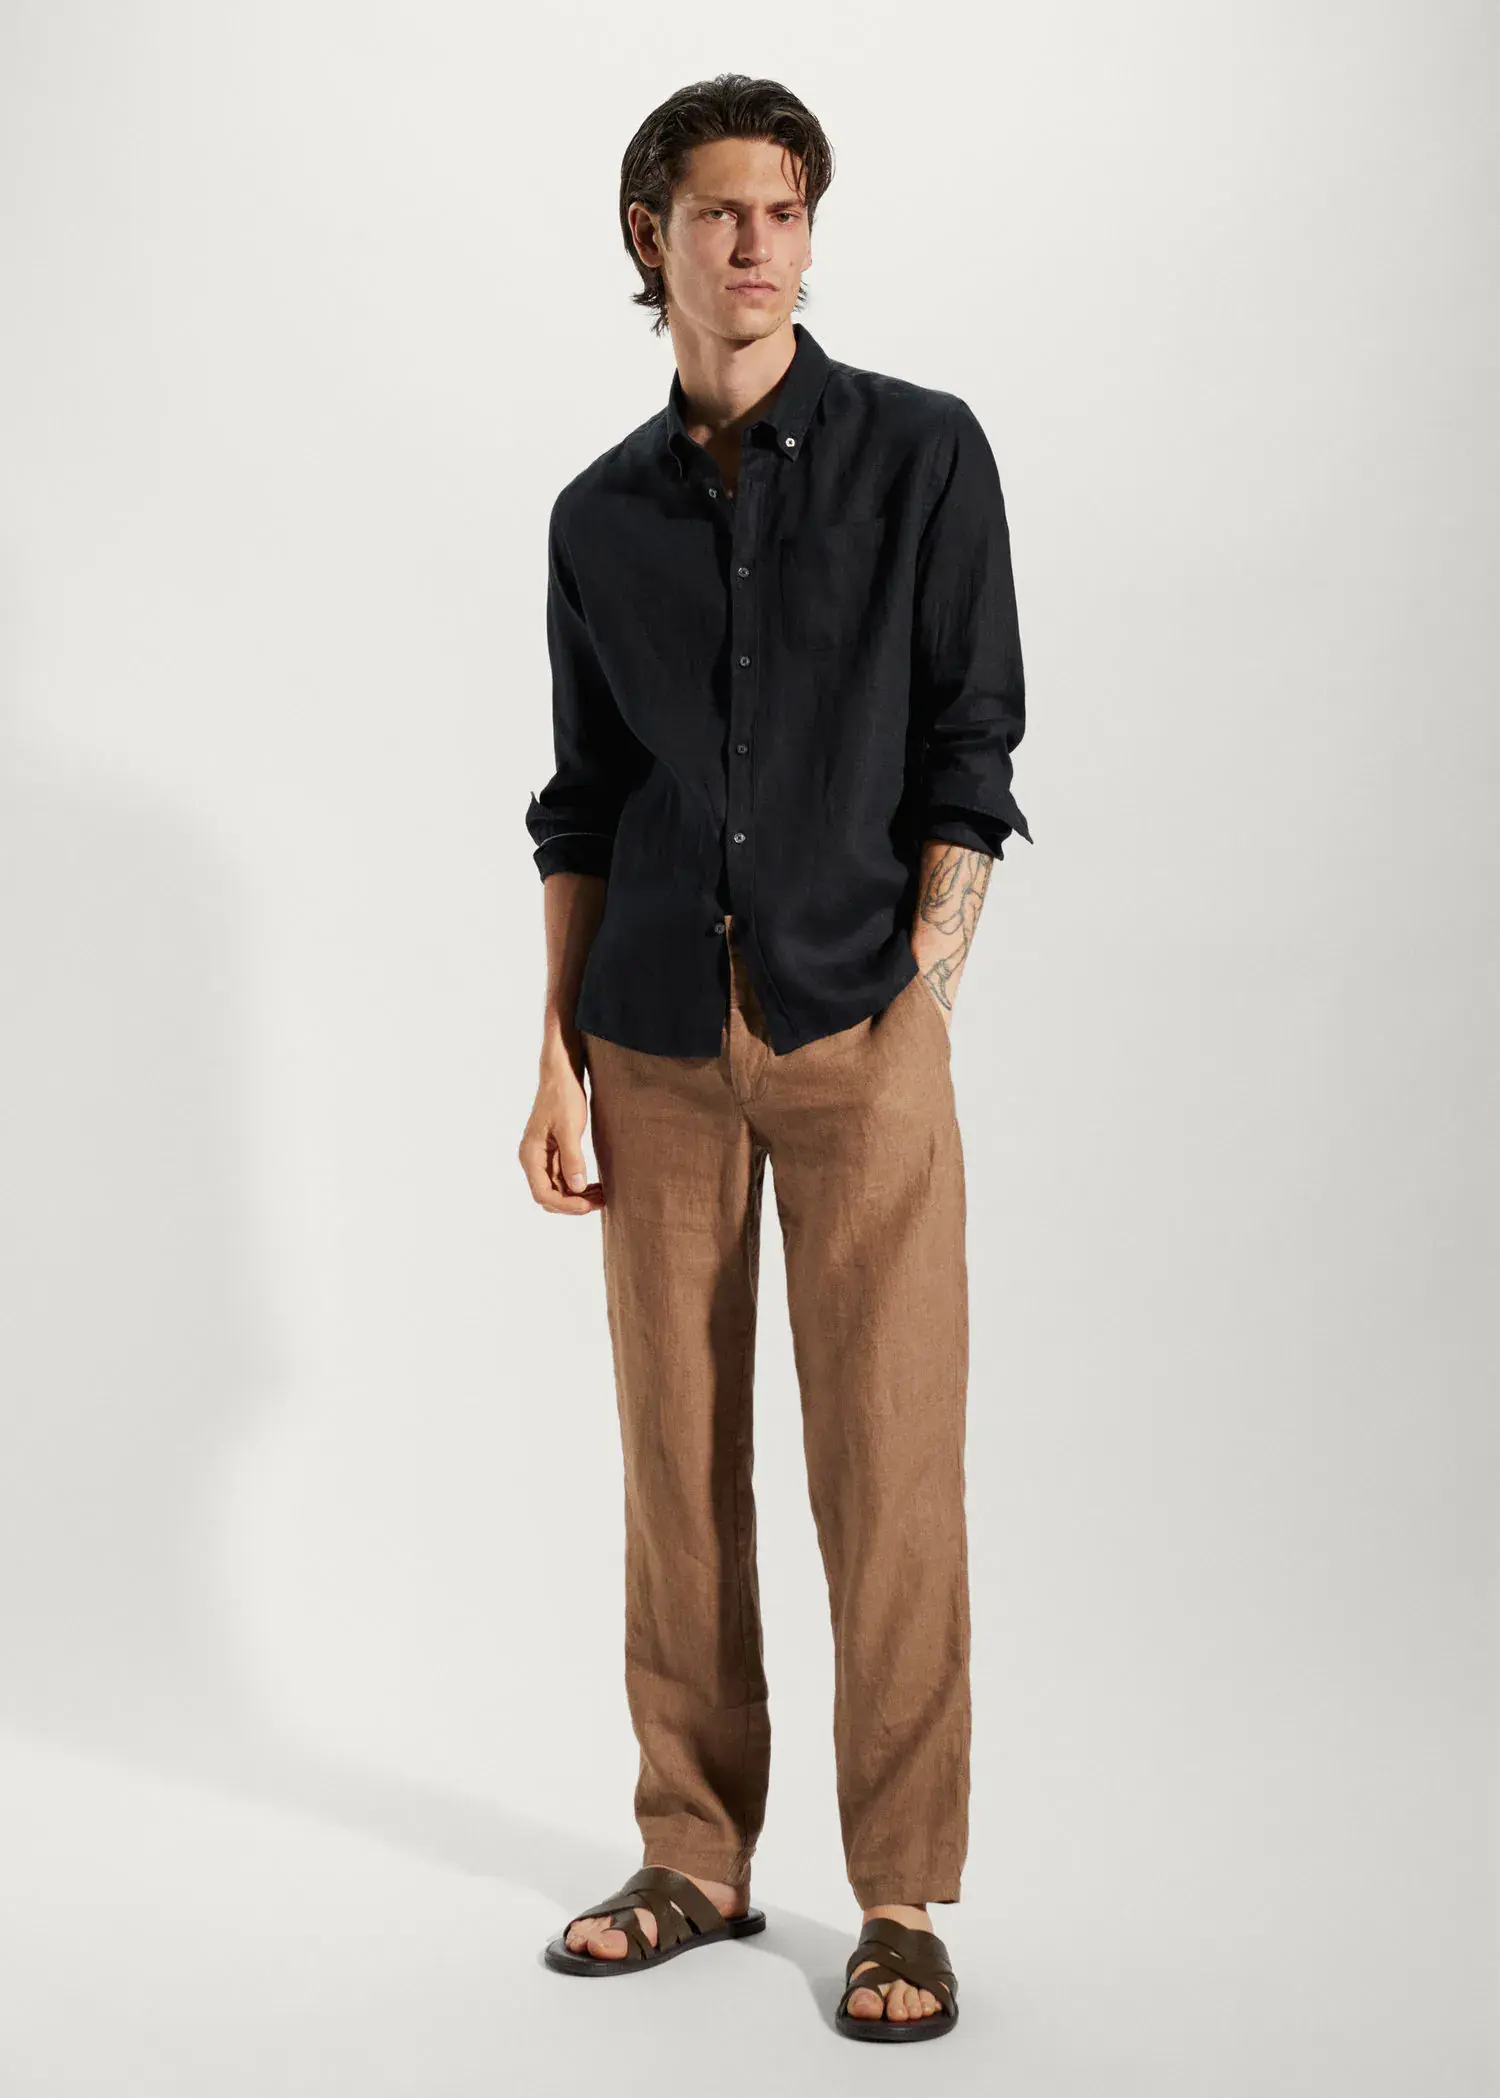 Mango 100% linen slim-fit shirt. a man in a black shirt and brown pants. 